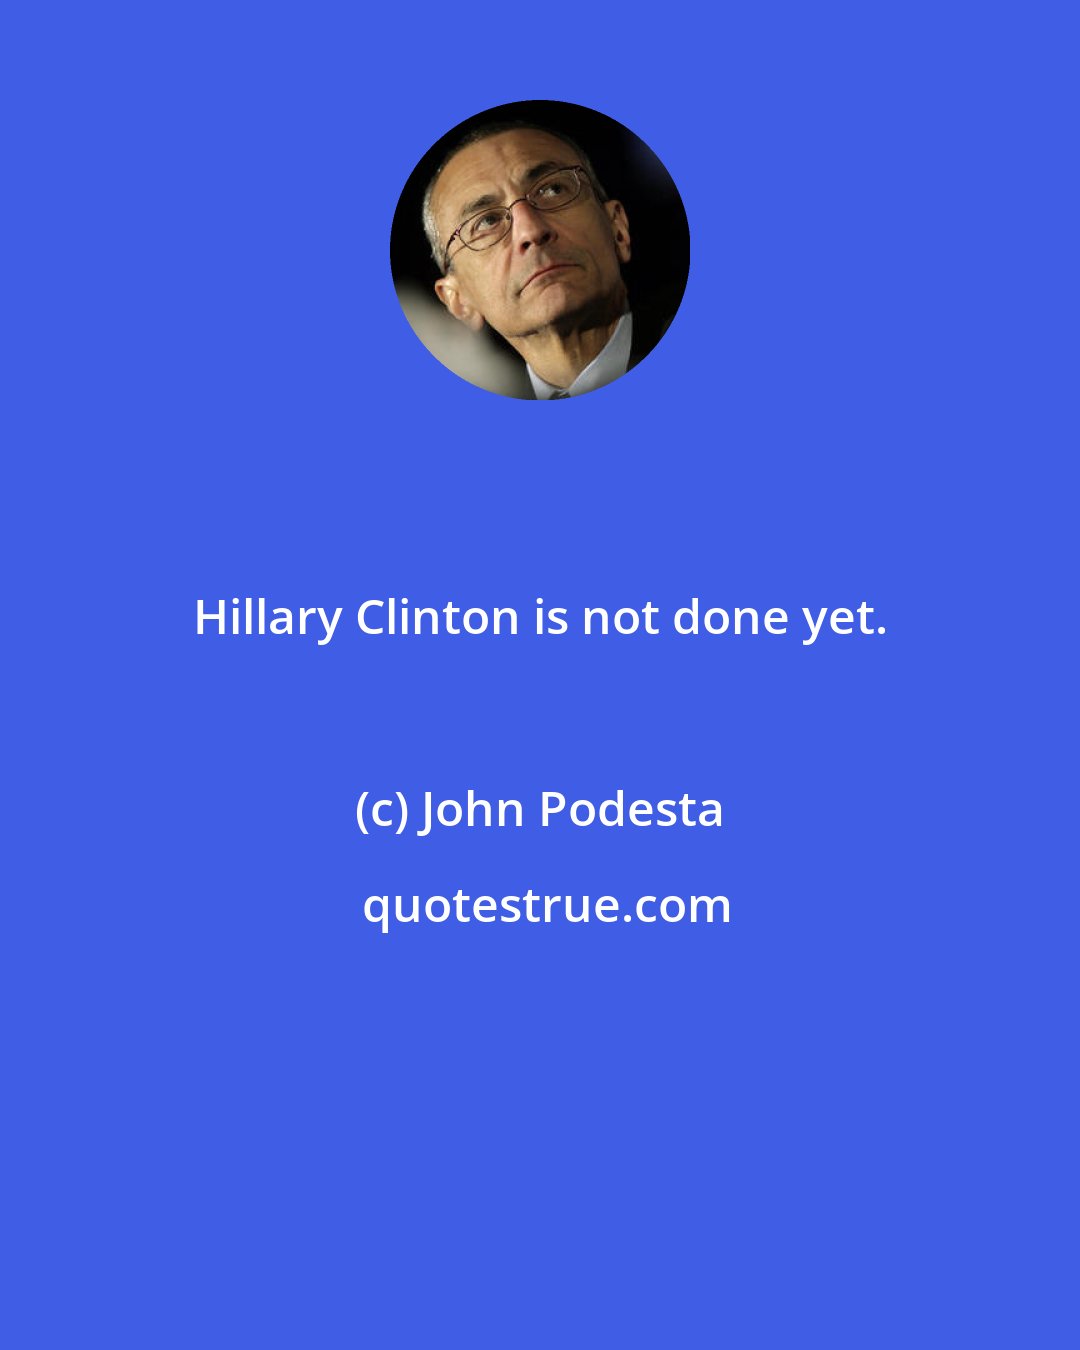 John Podesta: Hillary Clinton is not done yet.